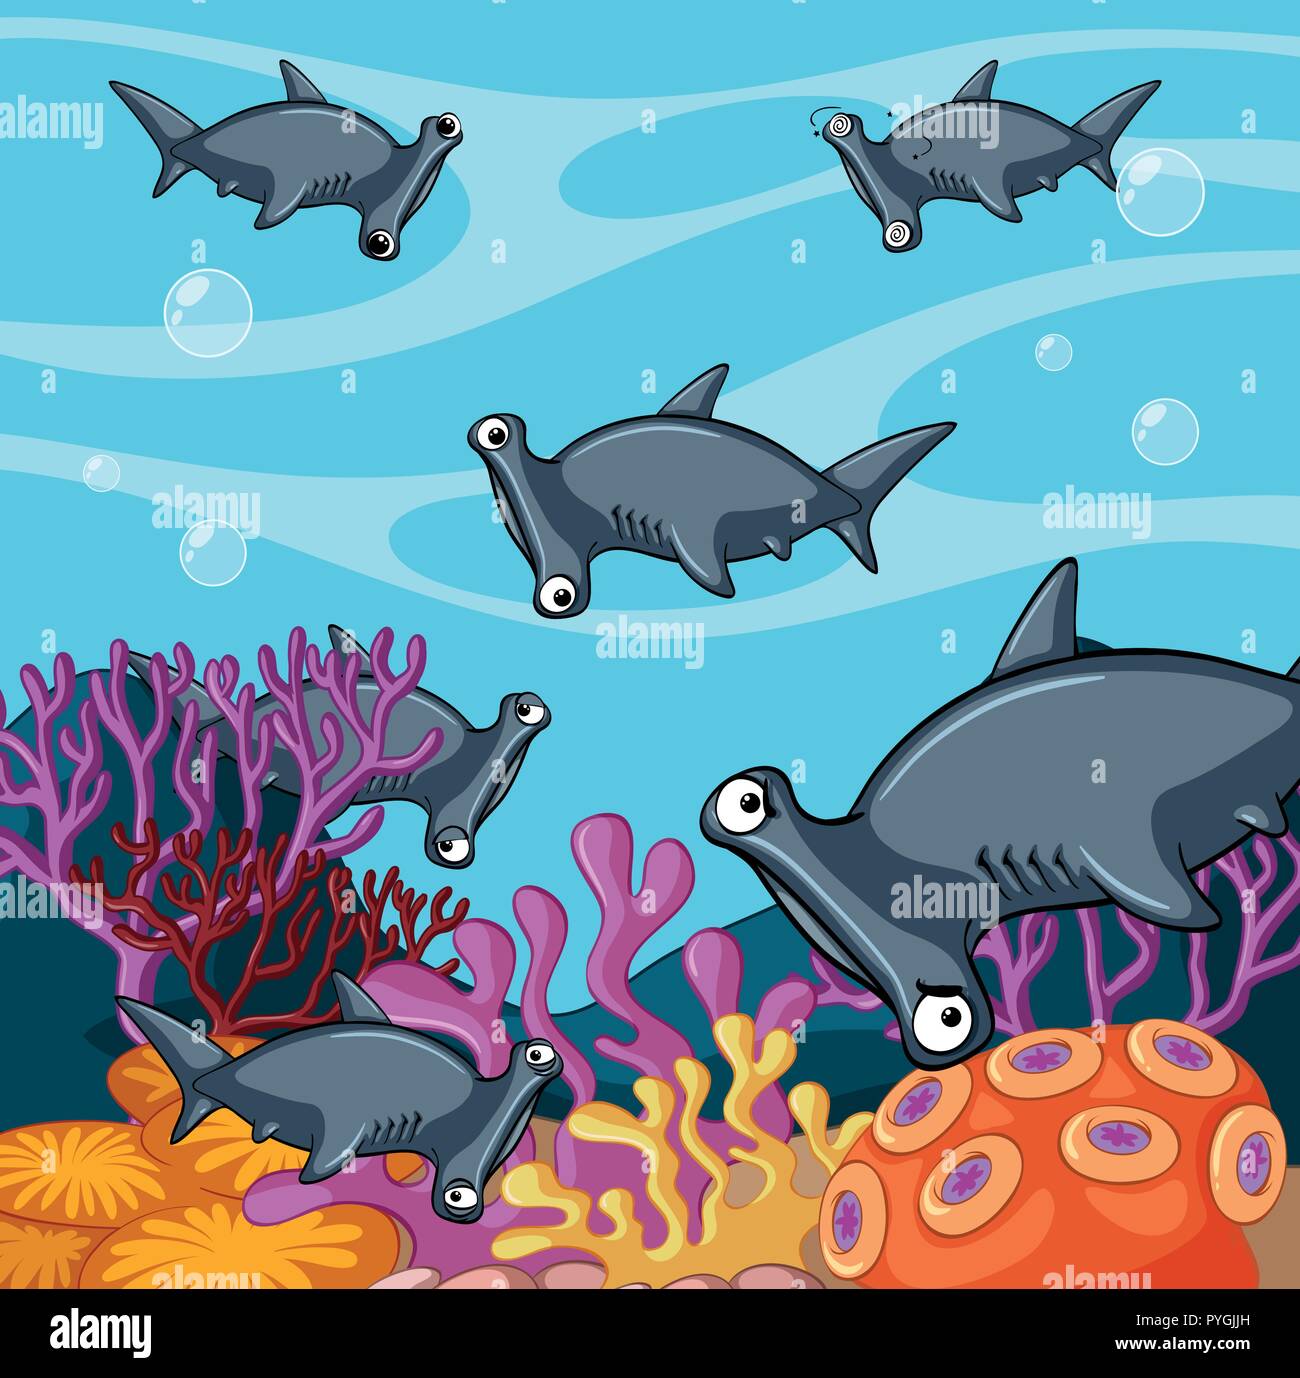 Scene with hammerhead sharks in the ocean illustration Stock Vector